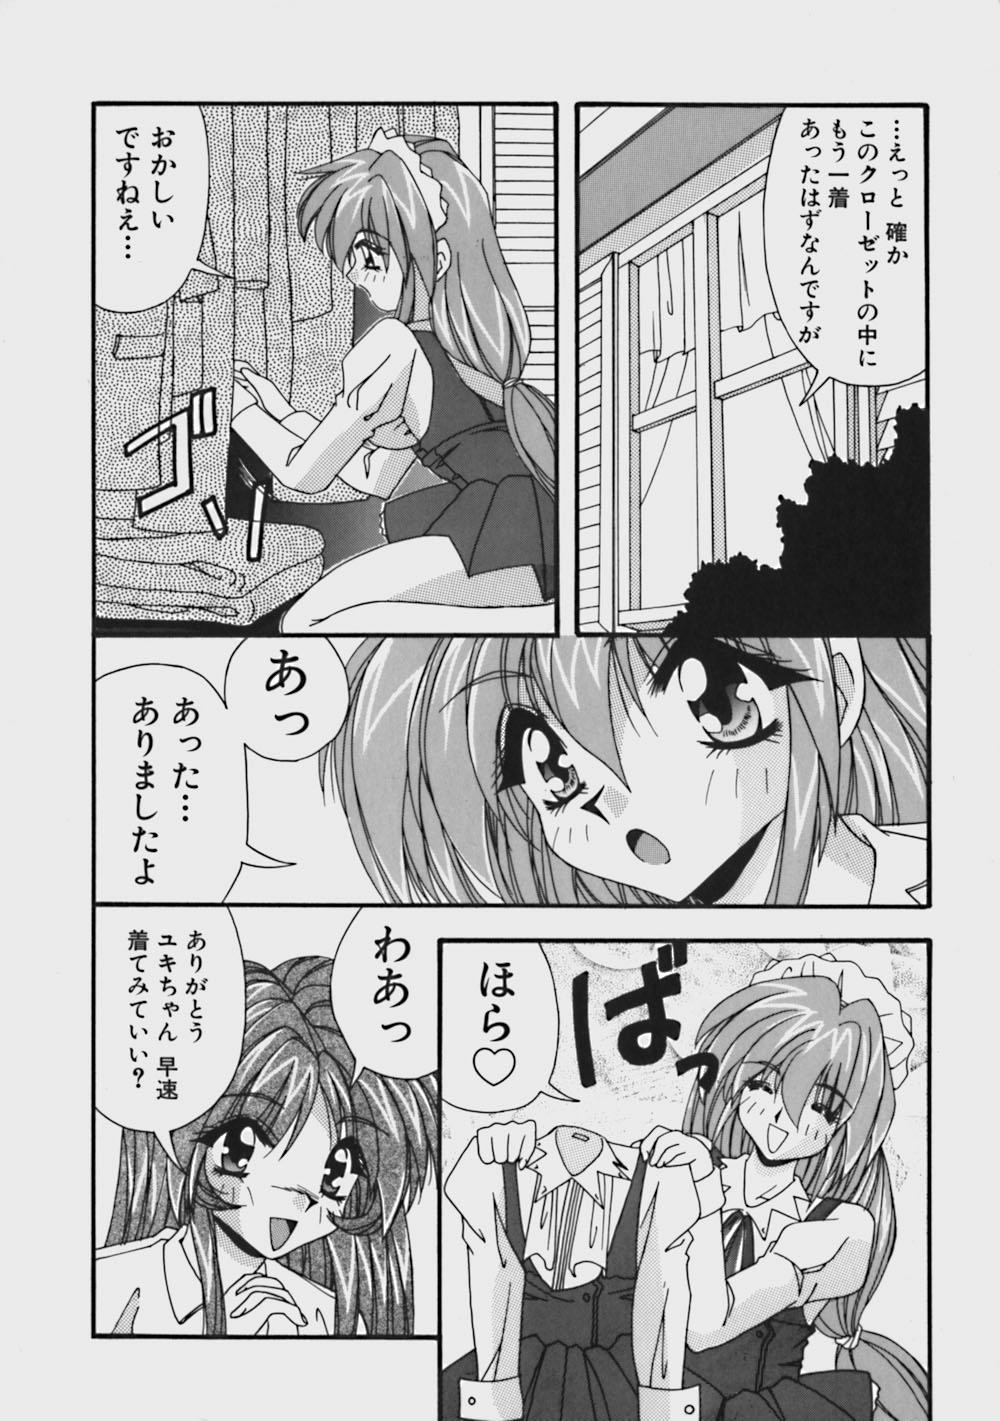 Action Kimama ni Peach Girl - Selfish Peach Girl Toy - Page 11